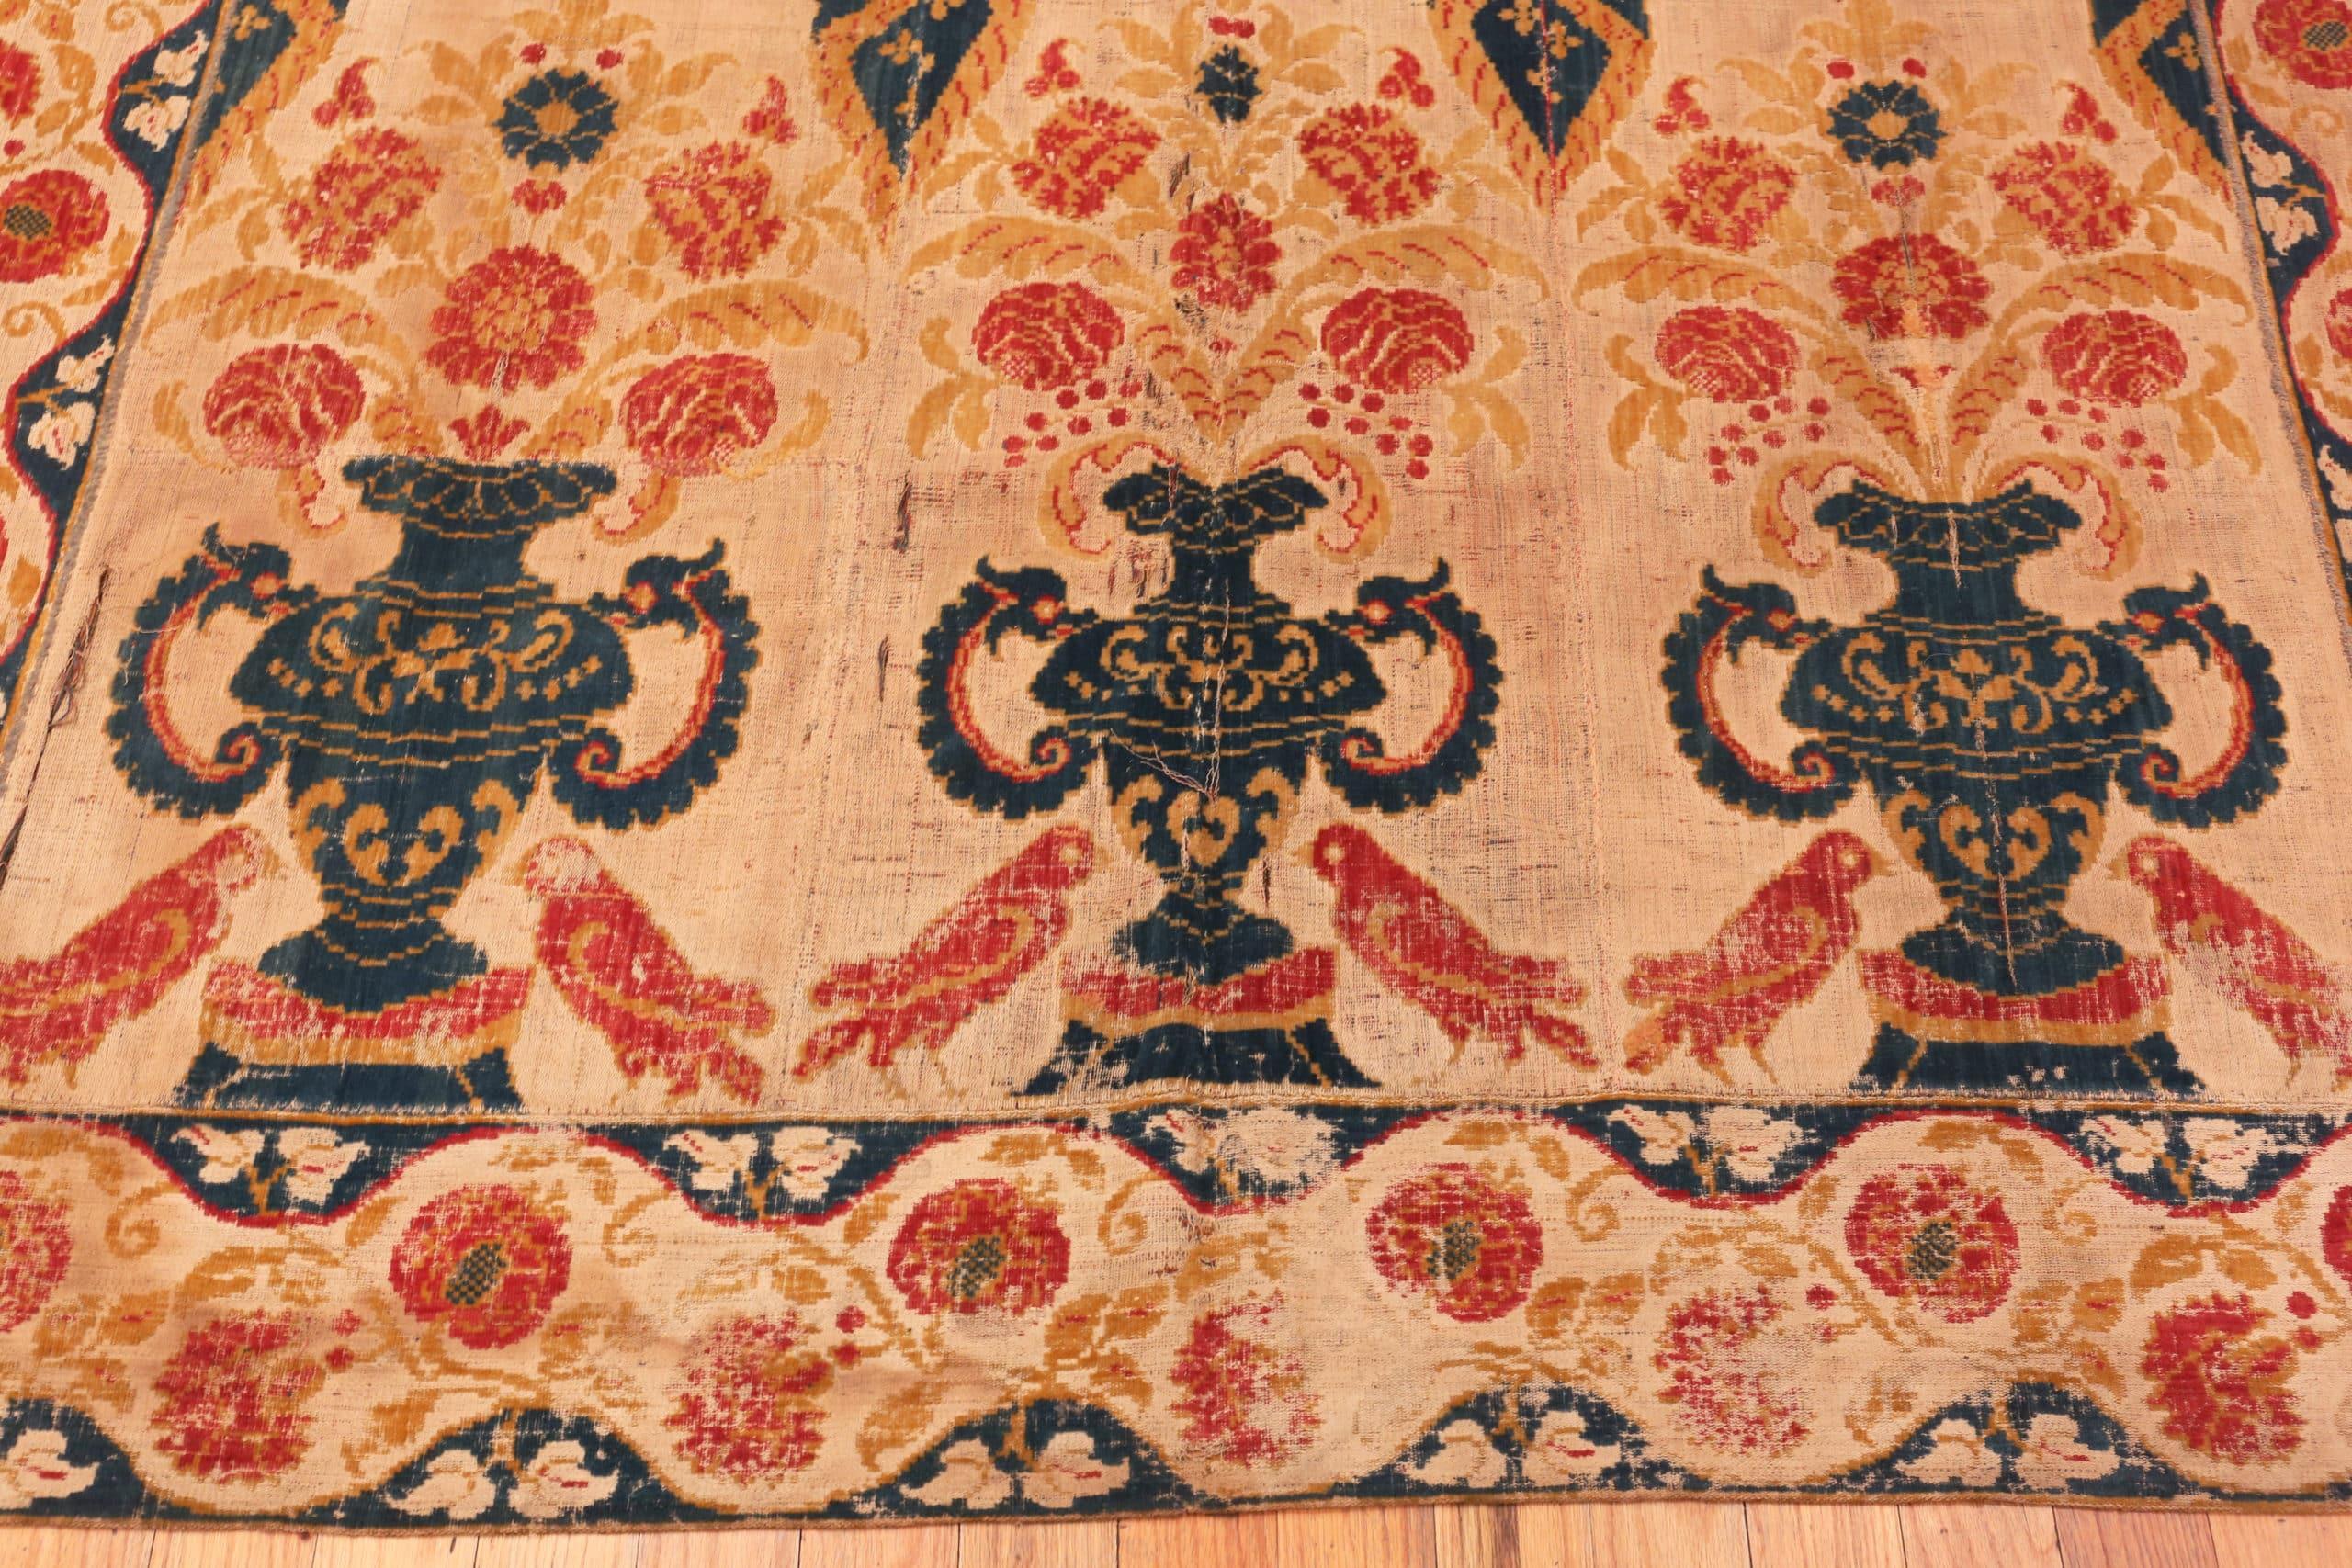 Victorian 18th Century Antique Velvet Wall Hanging Dutch Textile 6'3